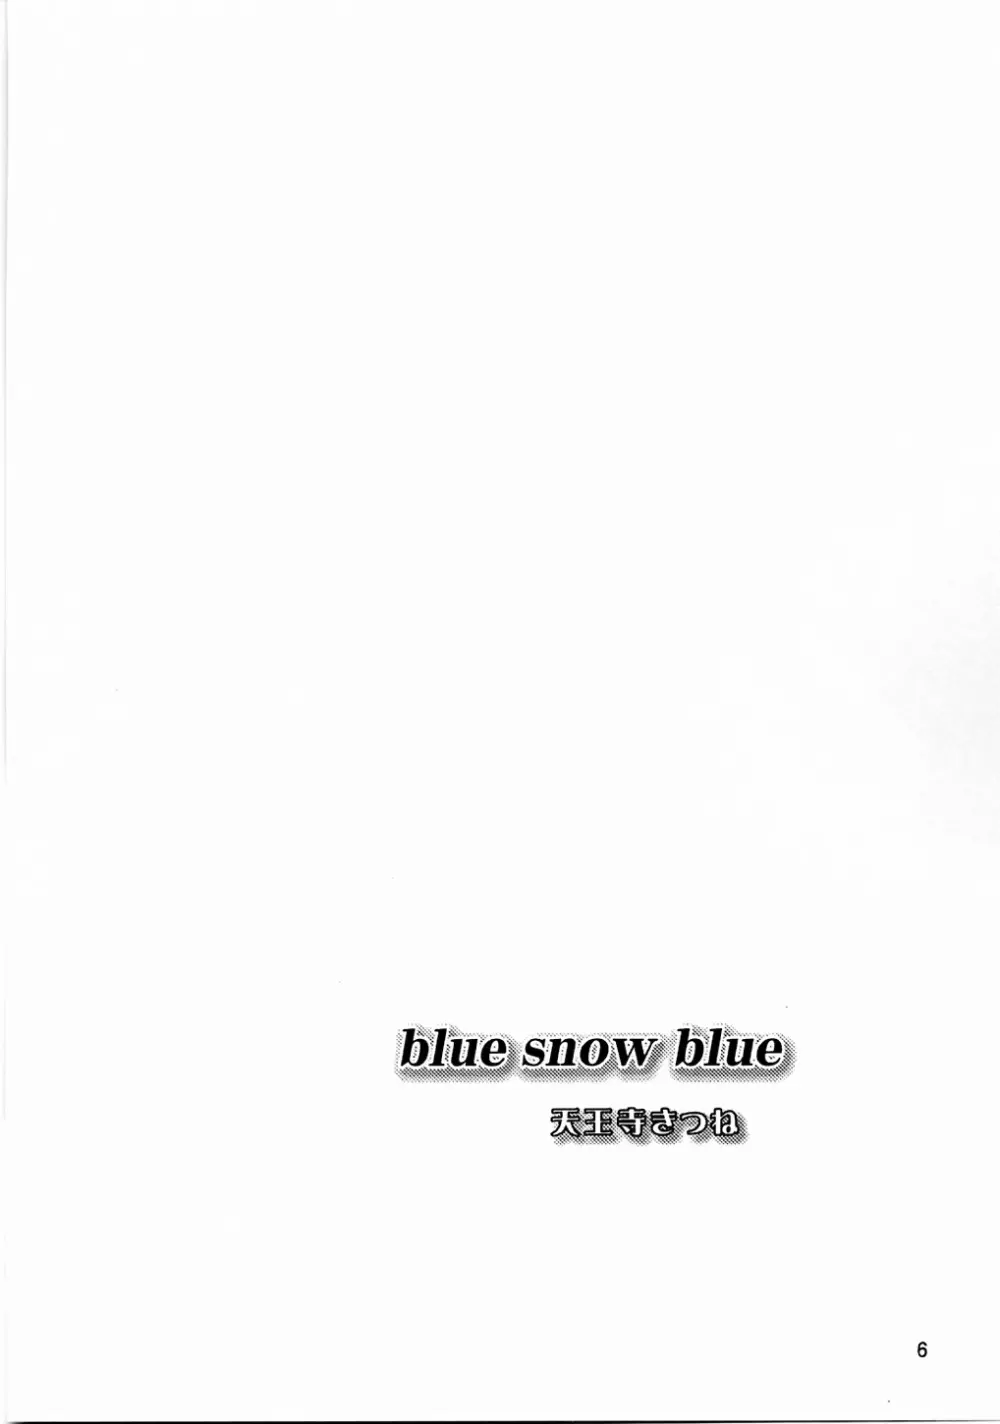 blue snow blue scene.3 - page5